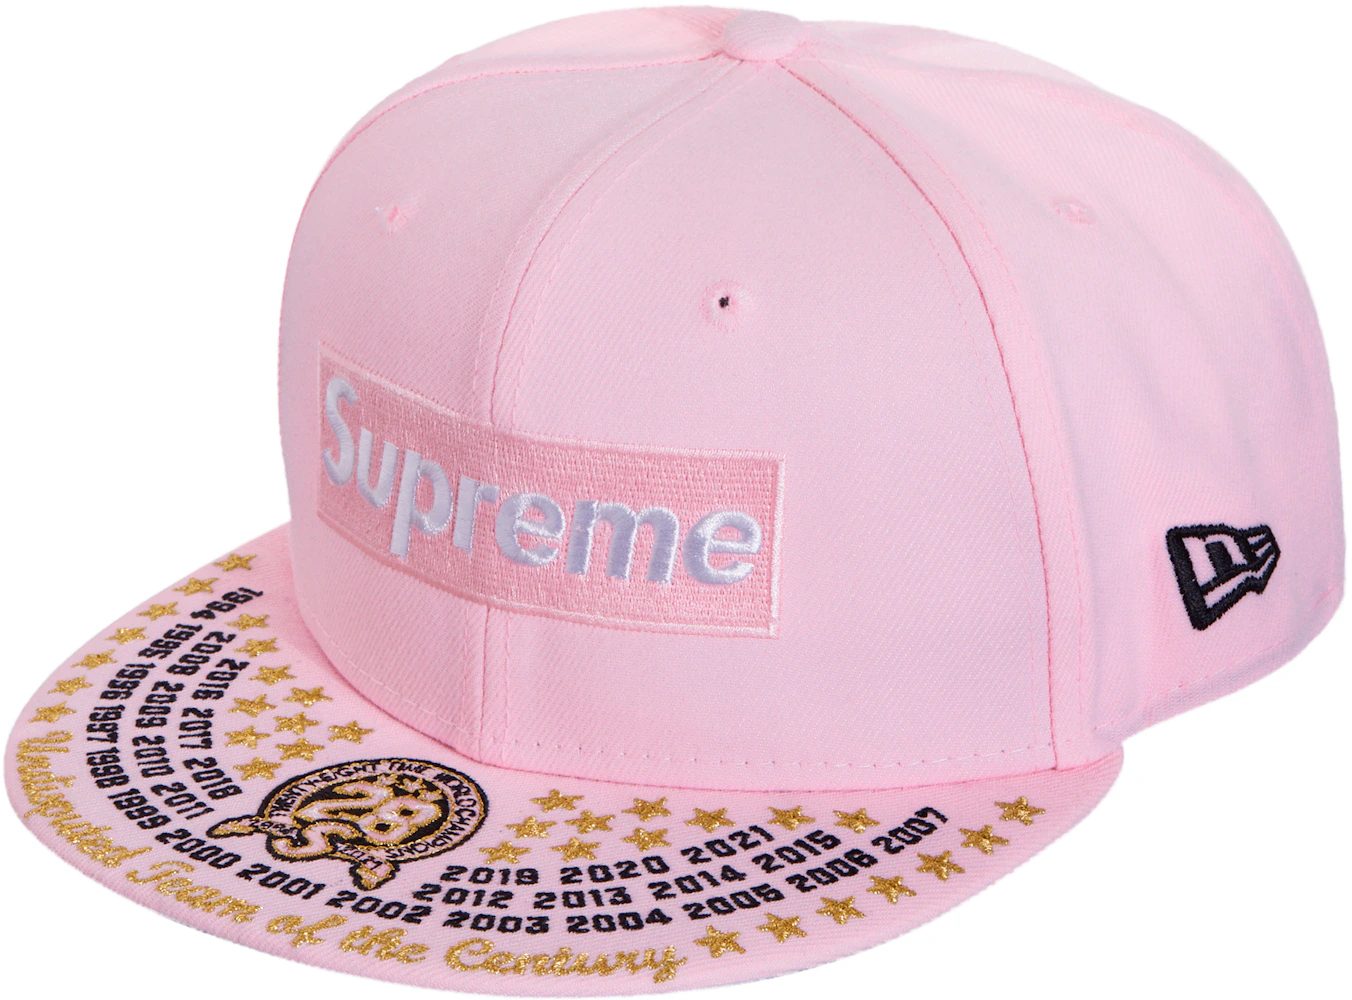 NEW Supreme S/S 2012 New Era Denim Red Box Logo Hat Size 7 3/8 100%  Authentic